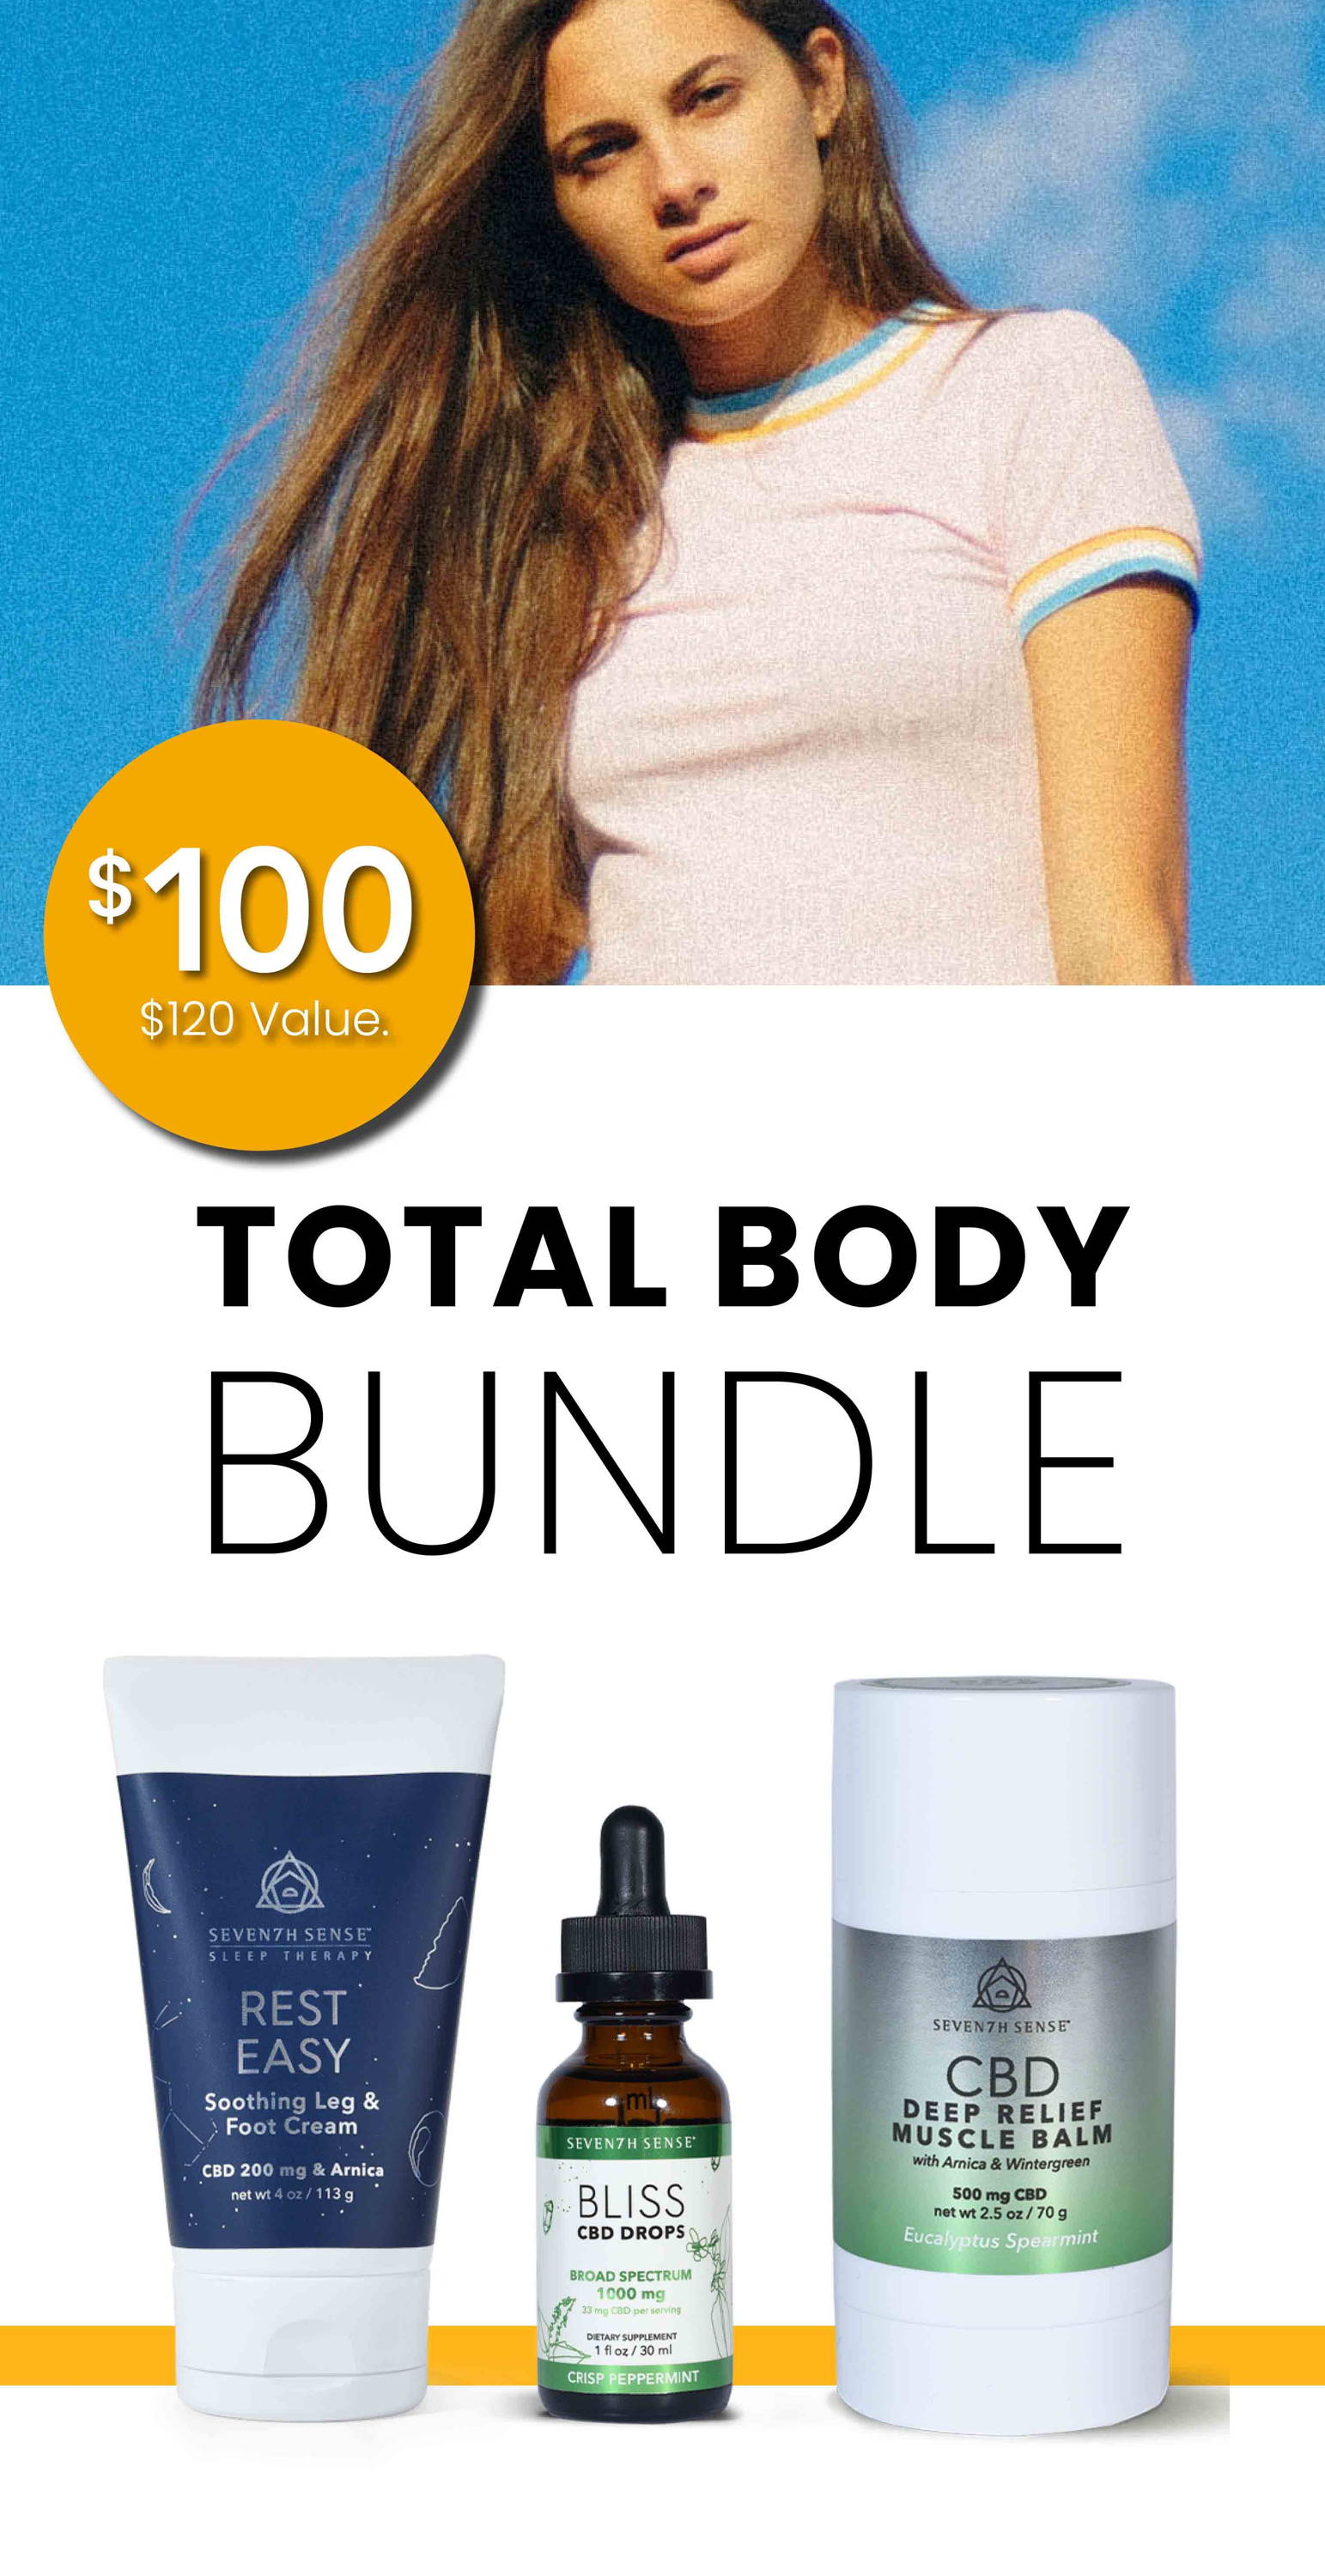 Total Body Bundle $100. $120 Value.